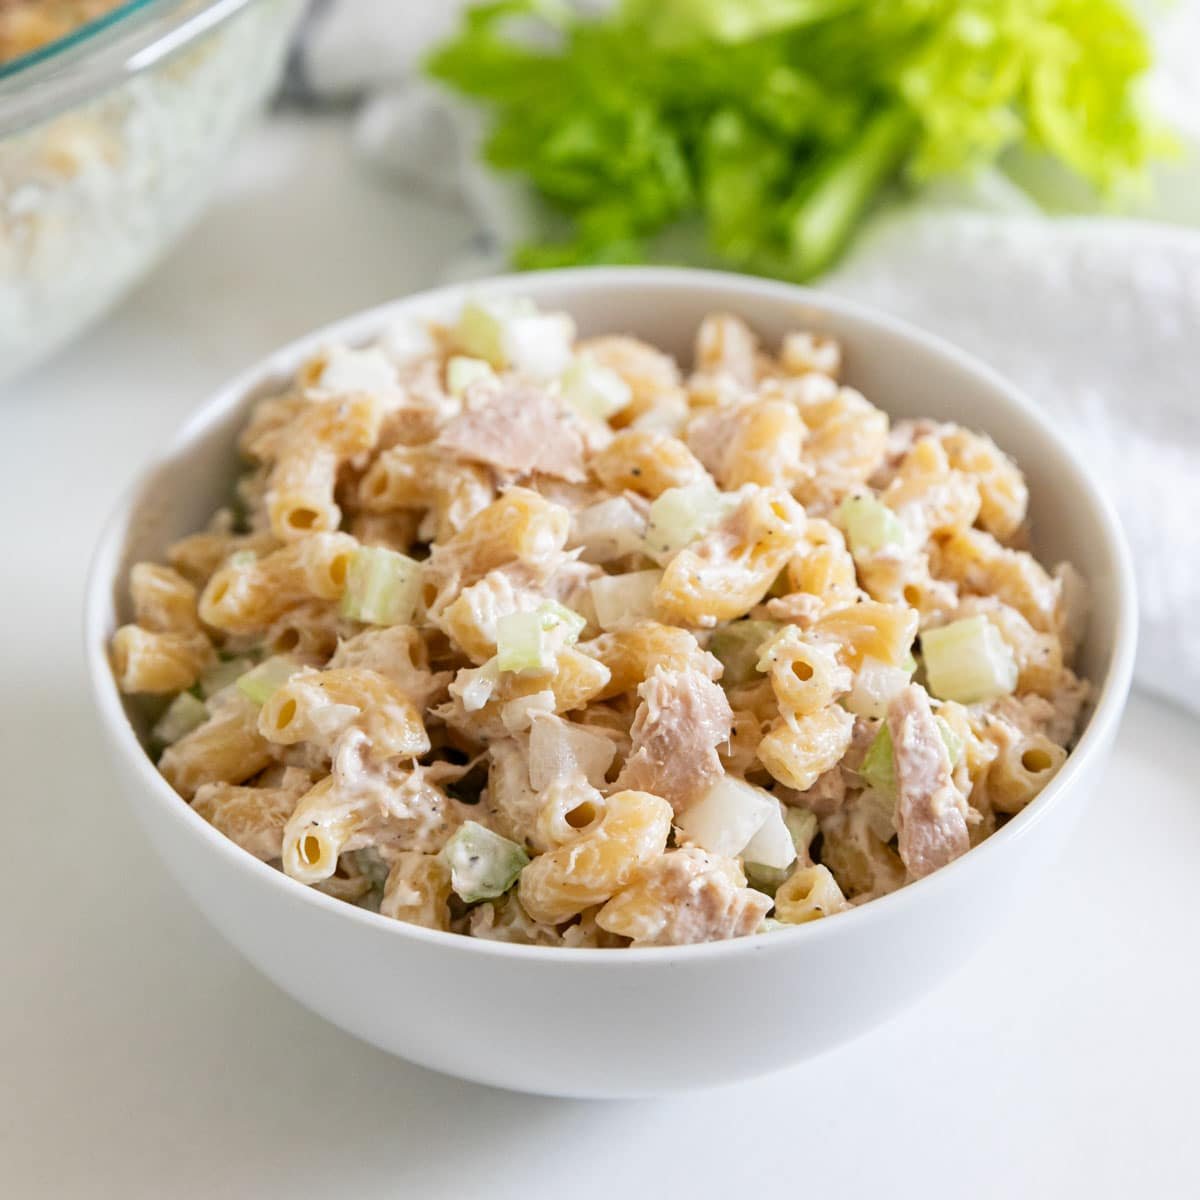 https://www.thelifejolie.com/wp-content/uploads/2021/06/Featured-Tuna-Macaroni-Salad-Recipe-The-Life-Jolie.jpg